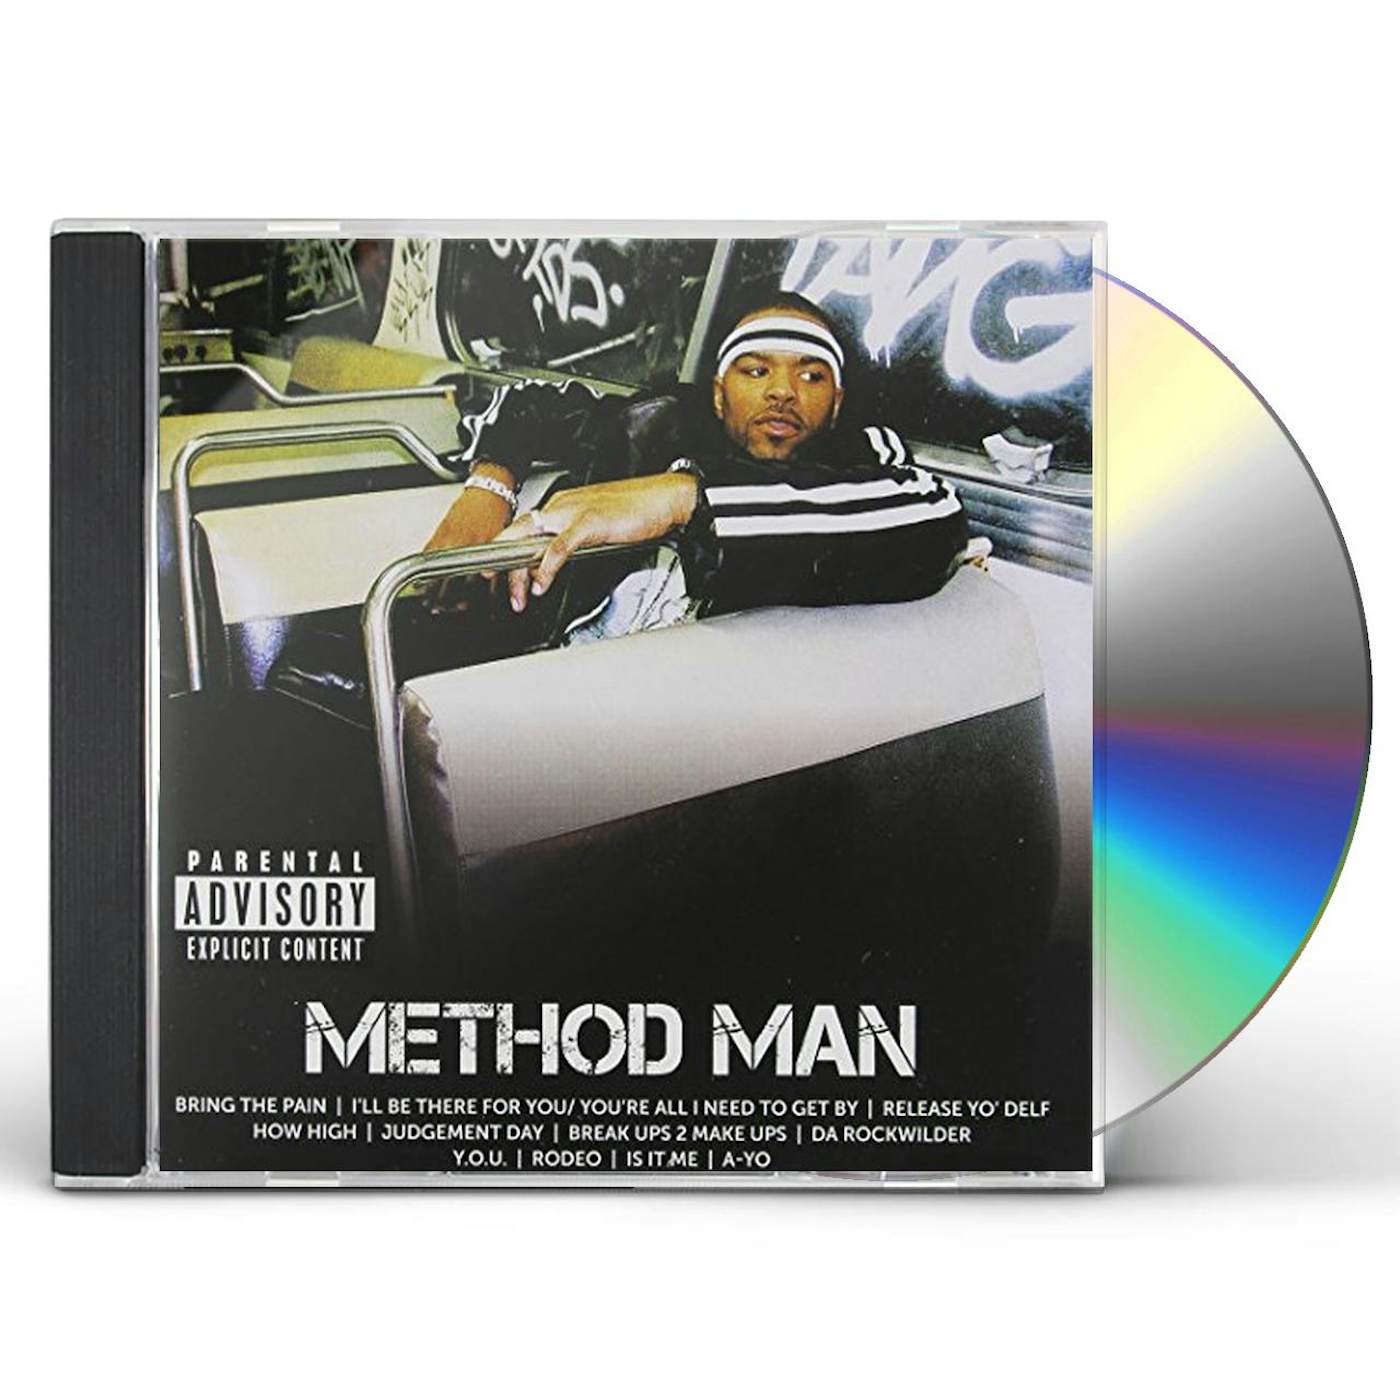 Method Man ICON CD